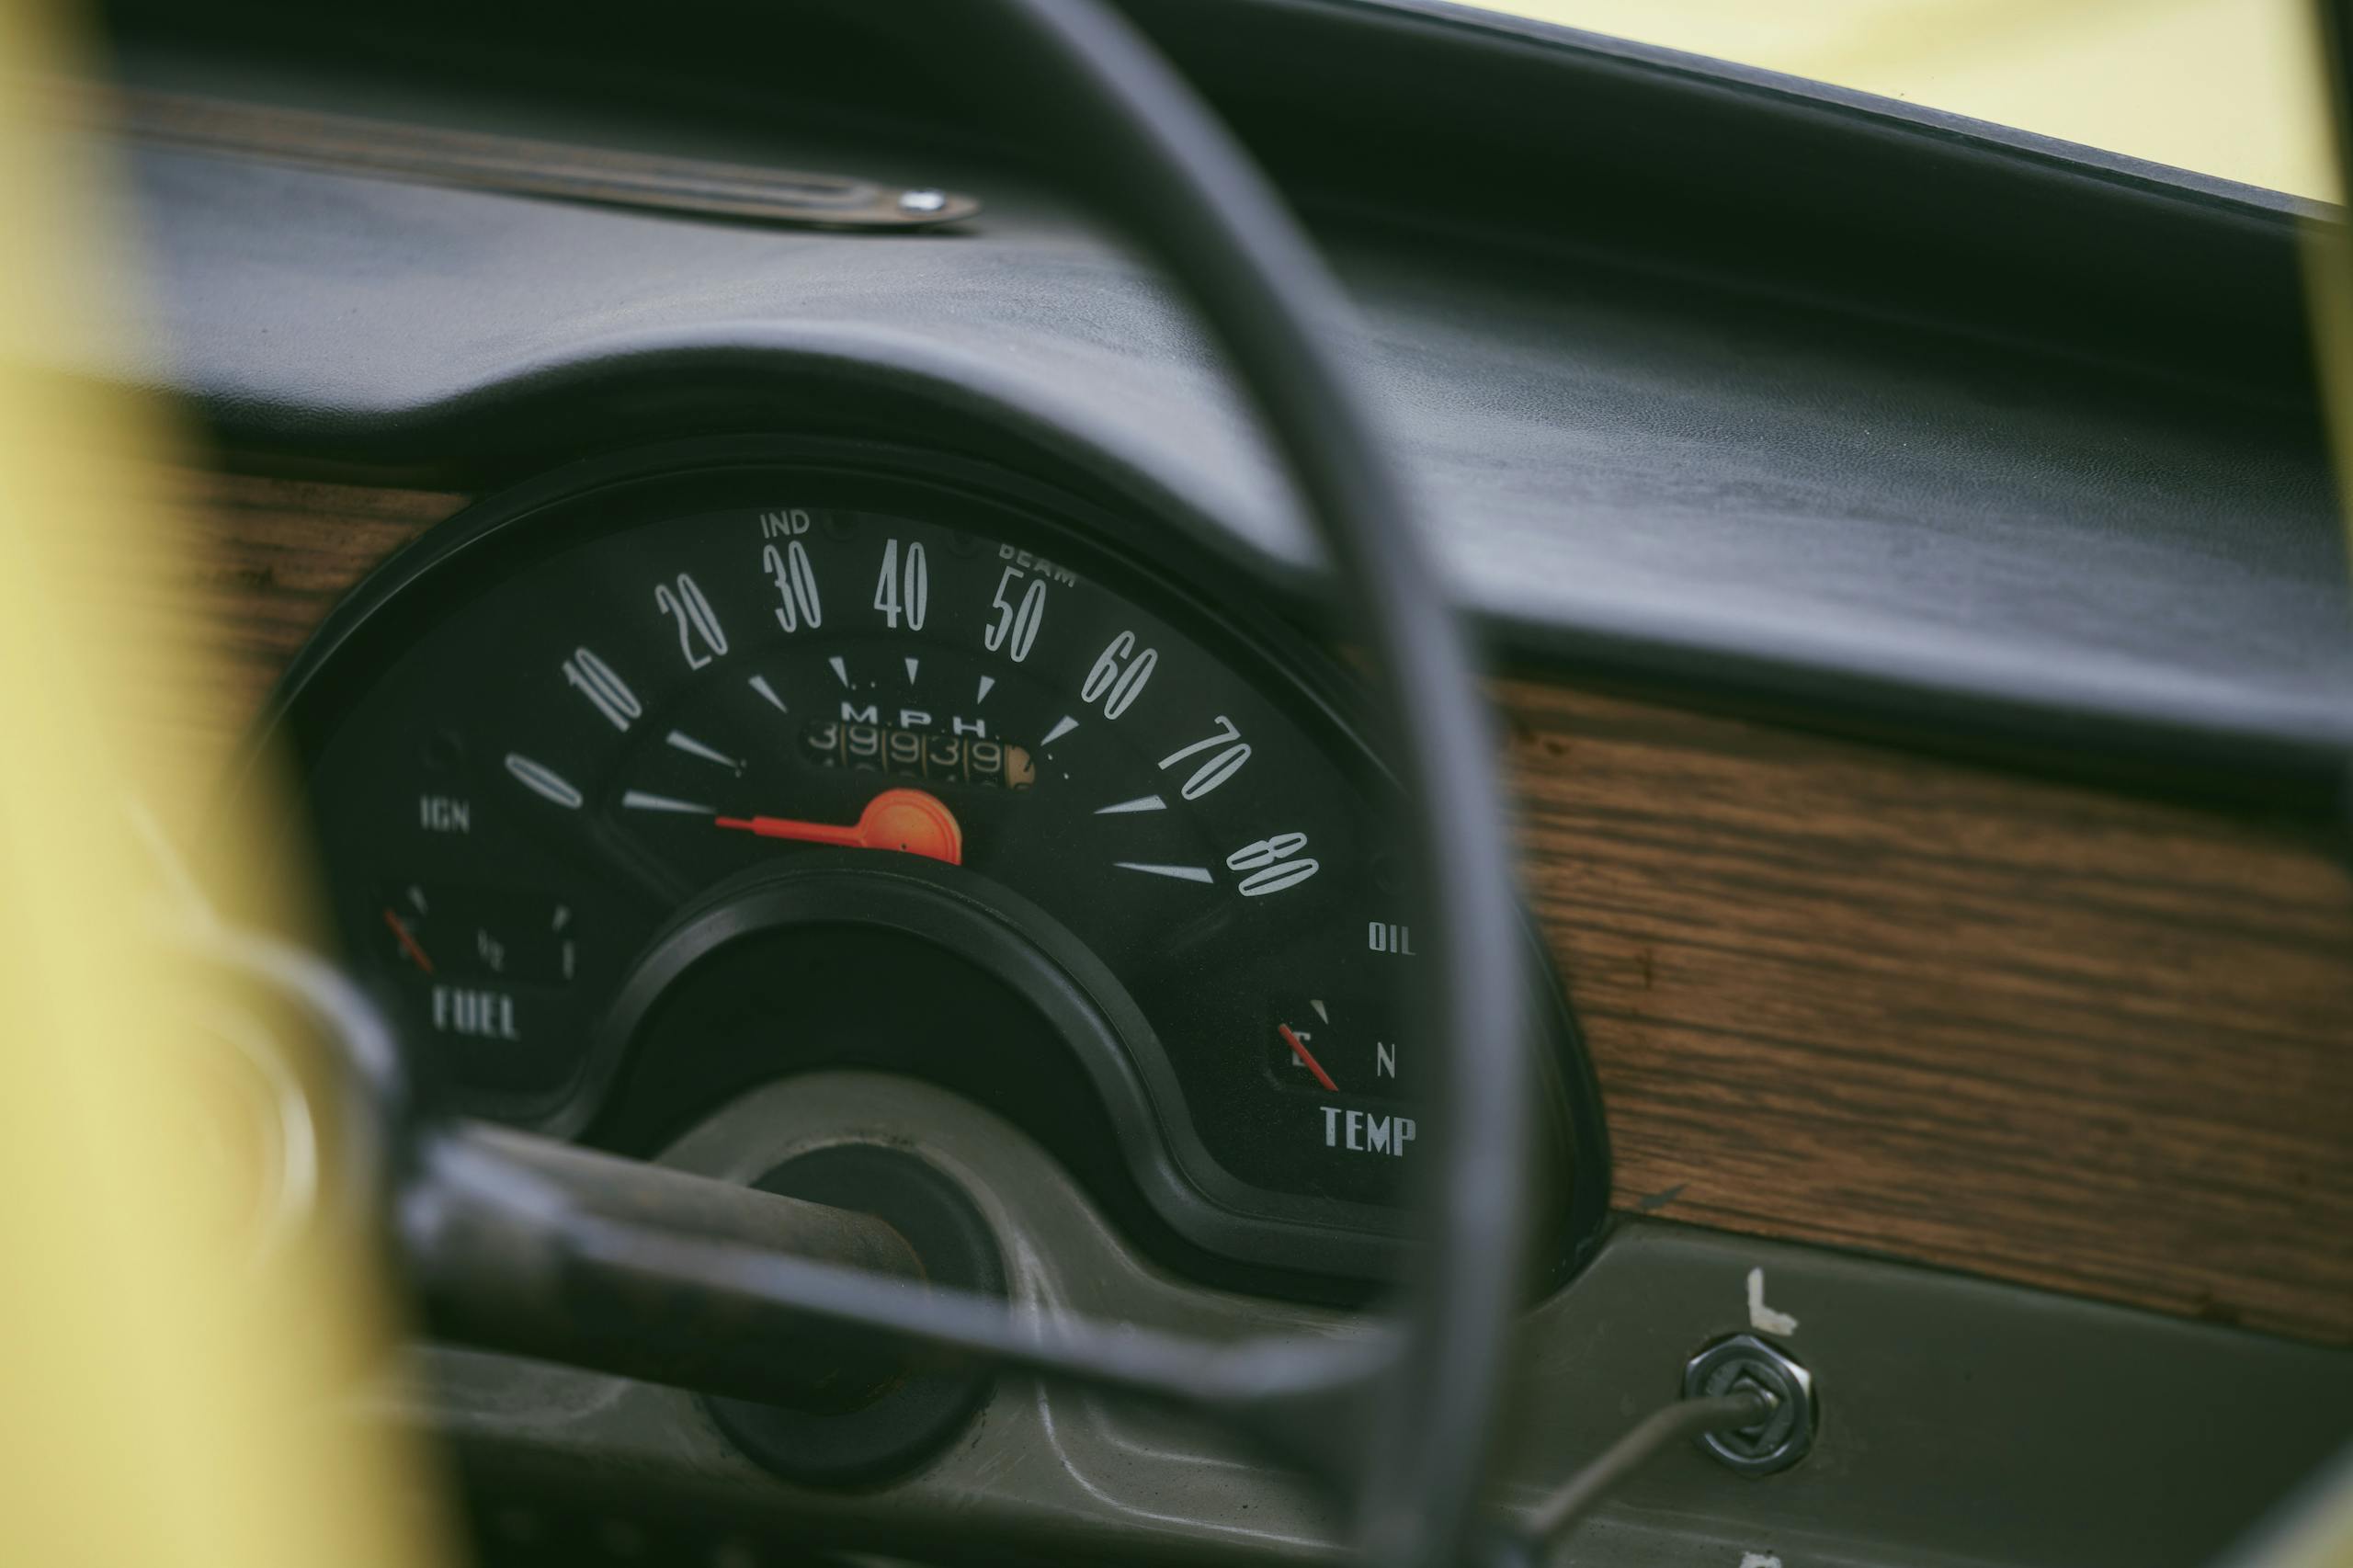 1971 Reliant Regal 330 interior speedo gauge detail